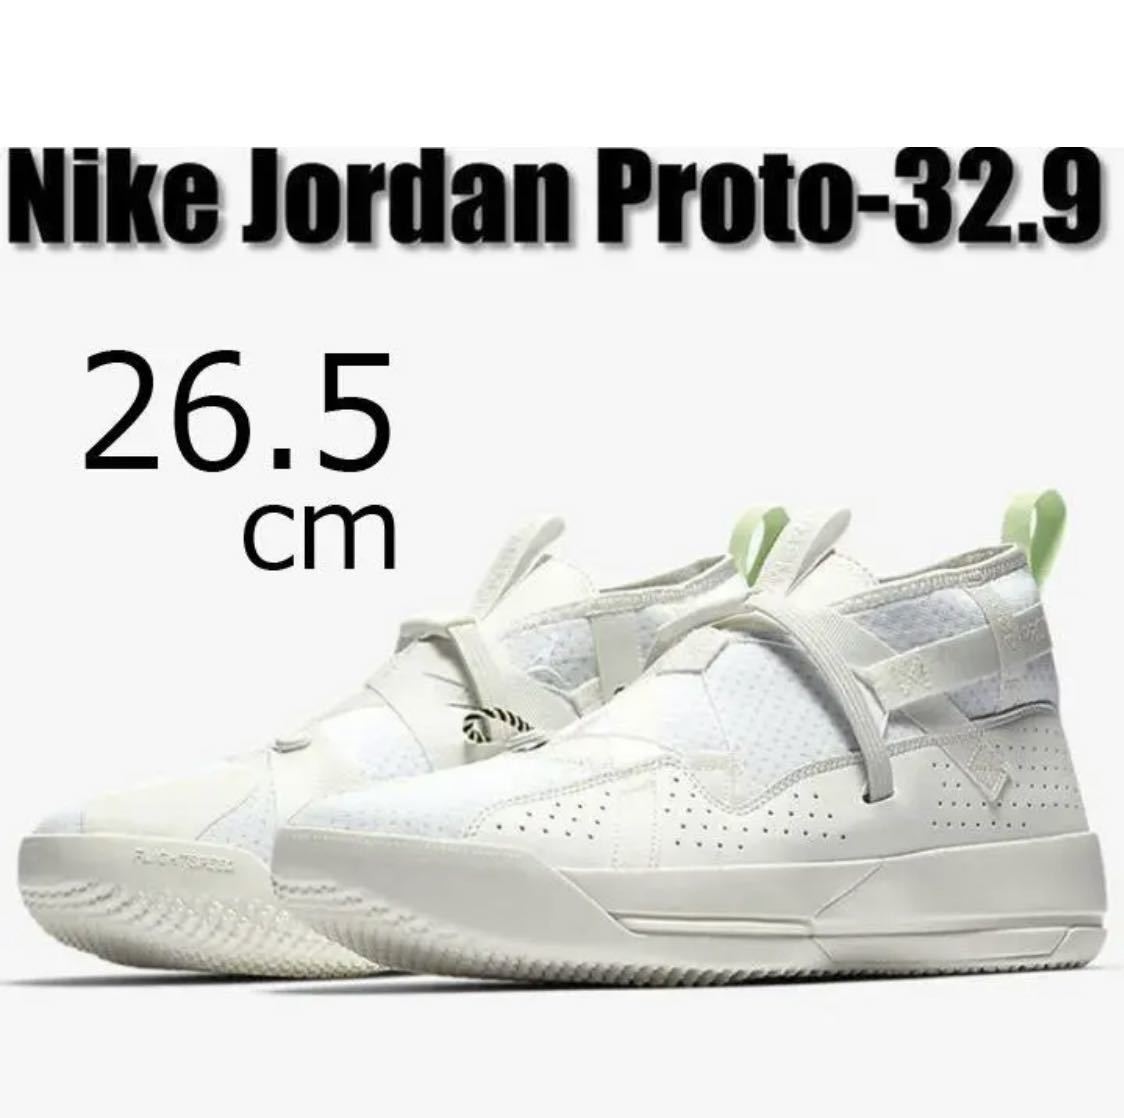 26.5㎝ Nike Jordan Proto-32.9 ナイキ ジョーダン プロト -32.9(26.5 